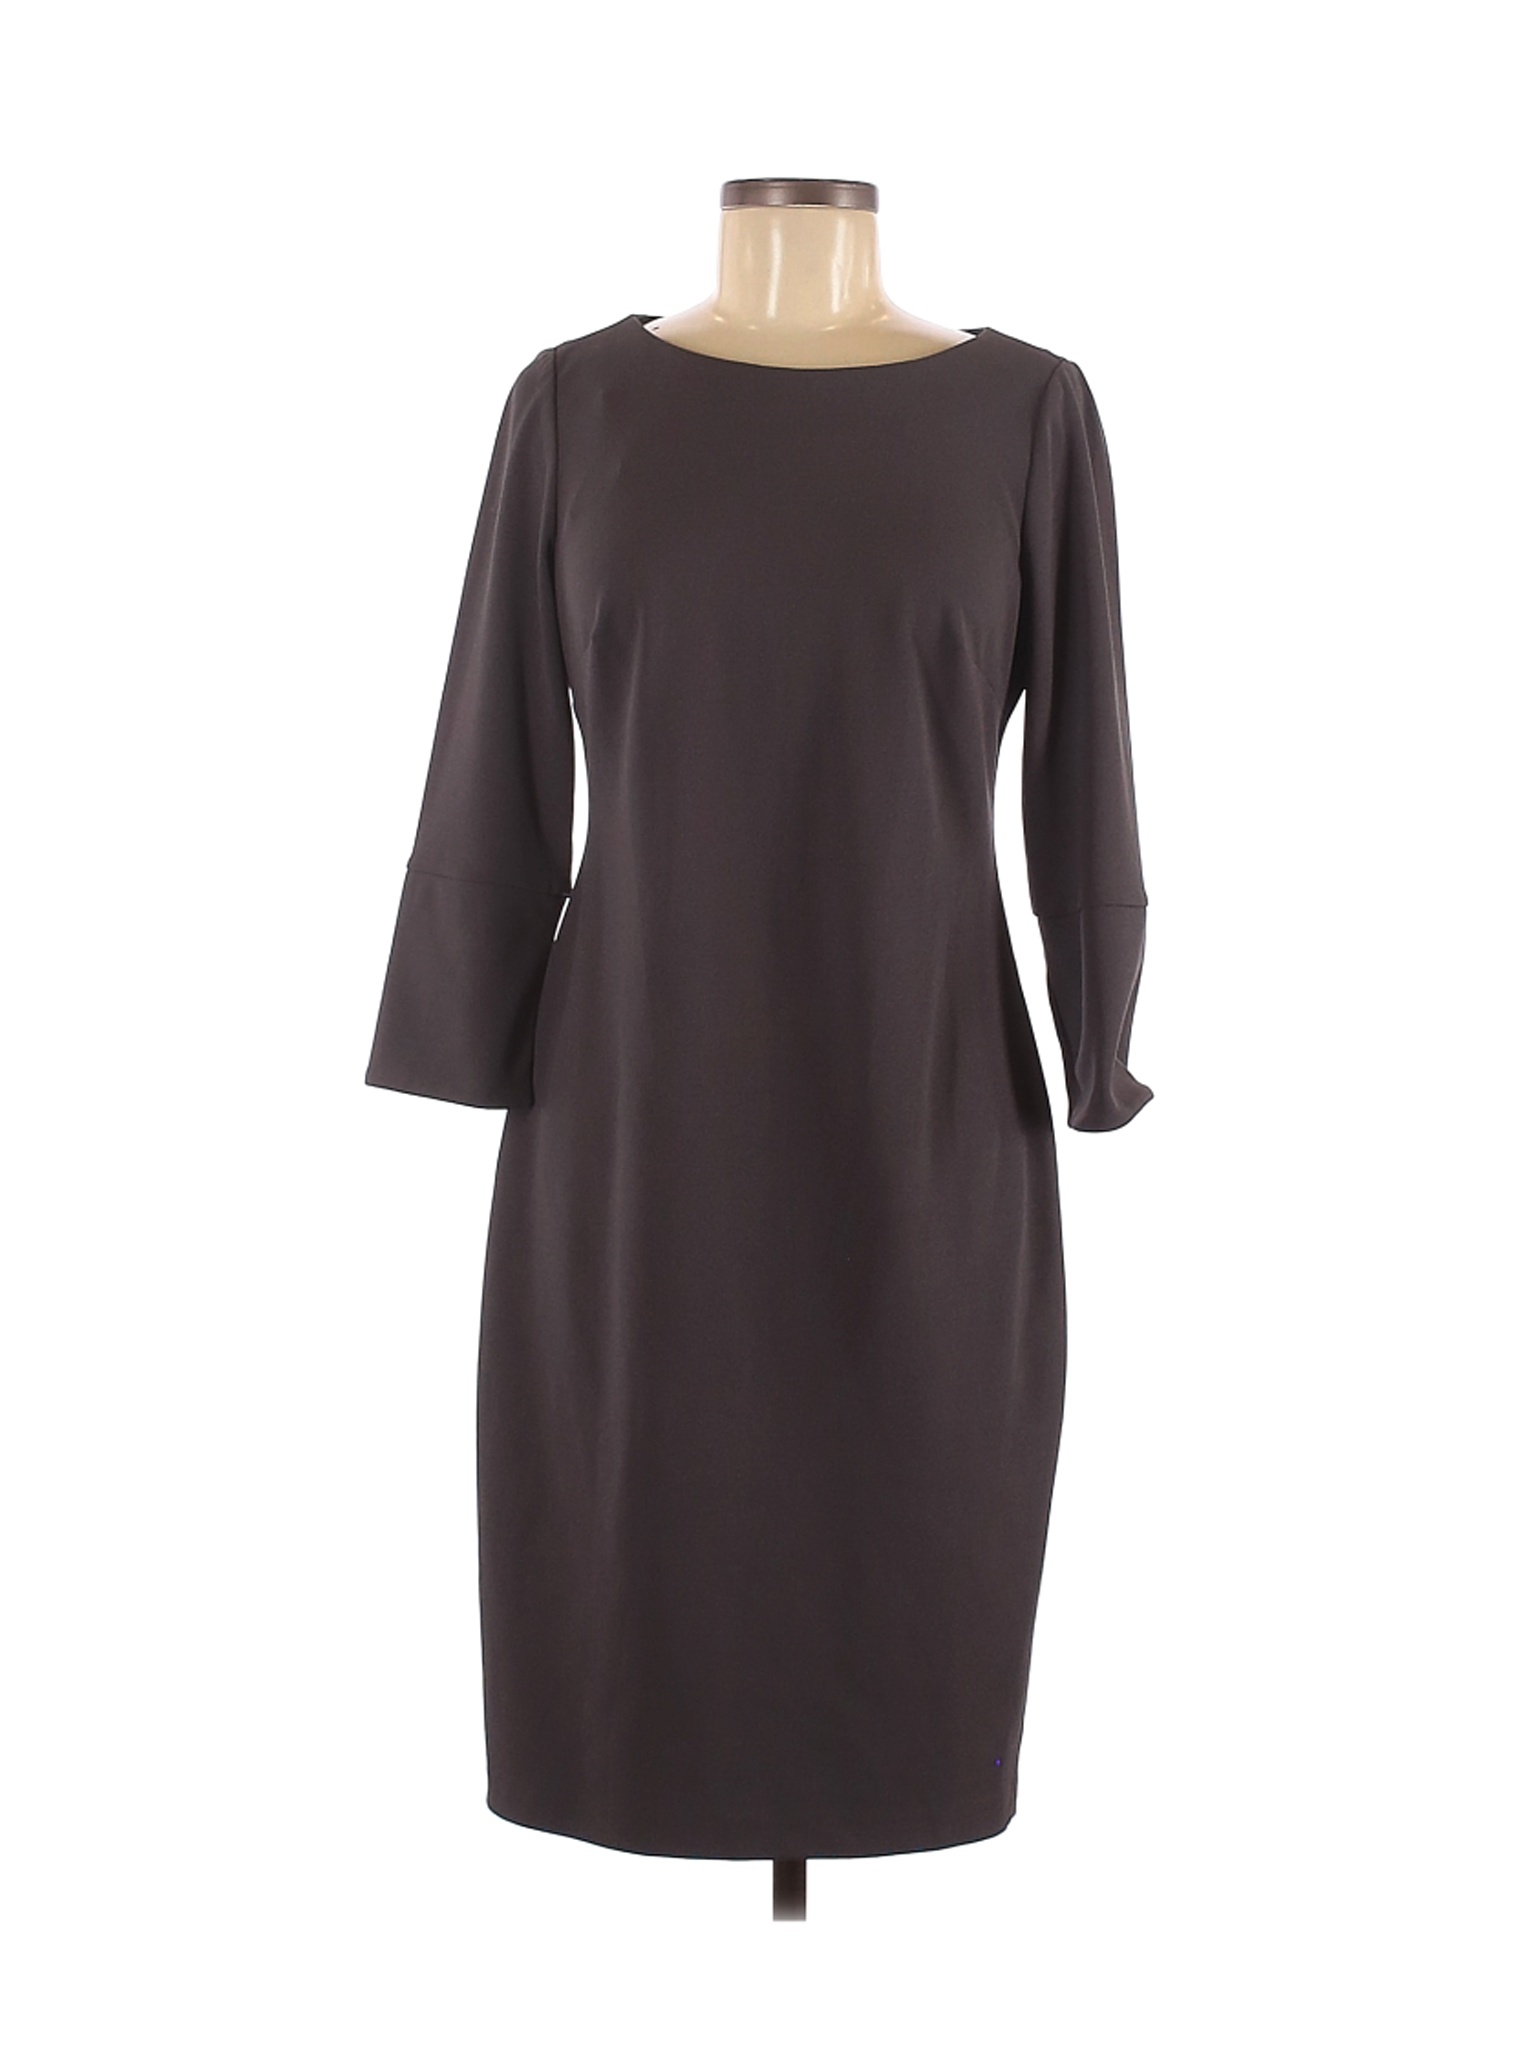 Calvin Klein Women Brown Casual Dress 8 | eBay